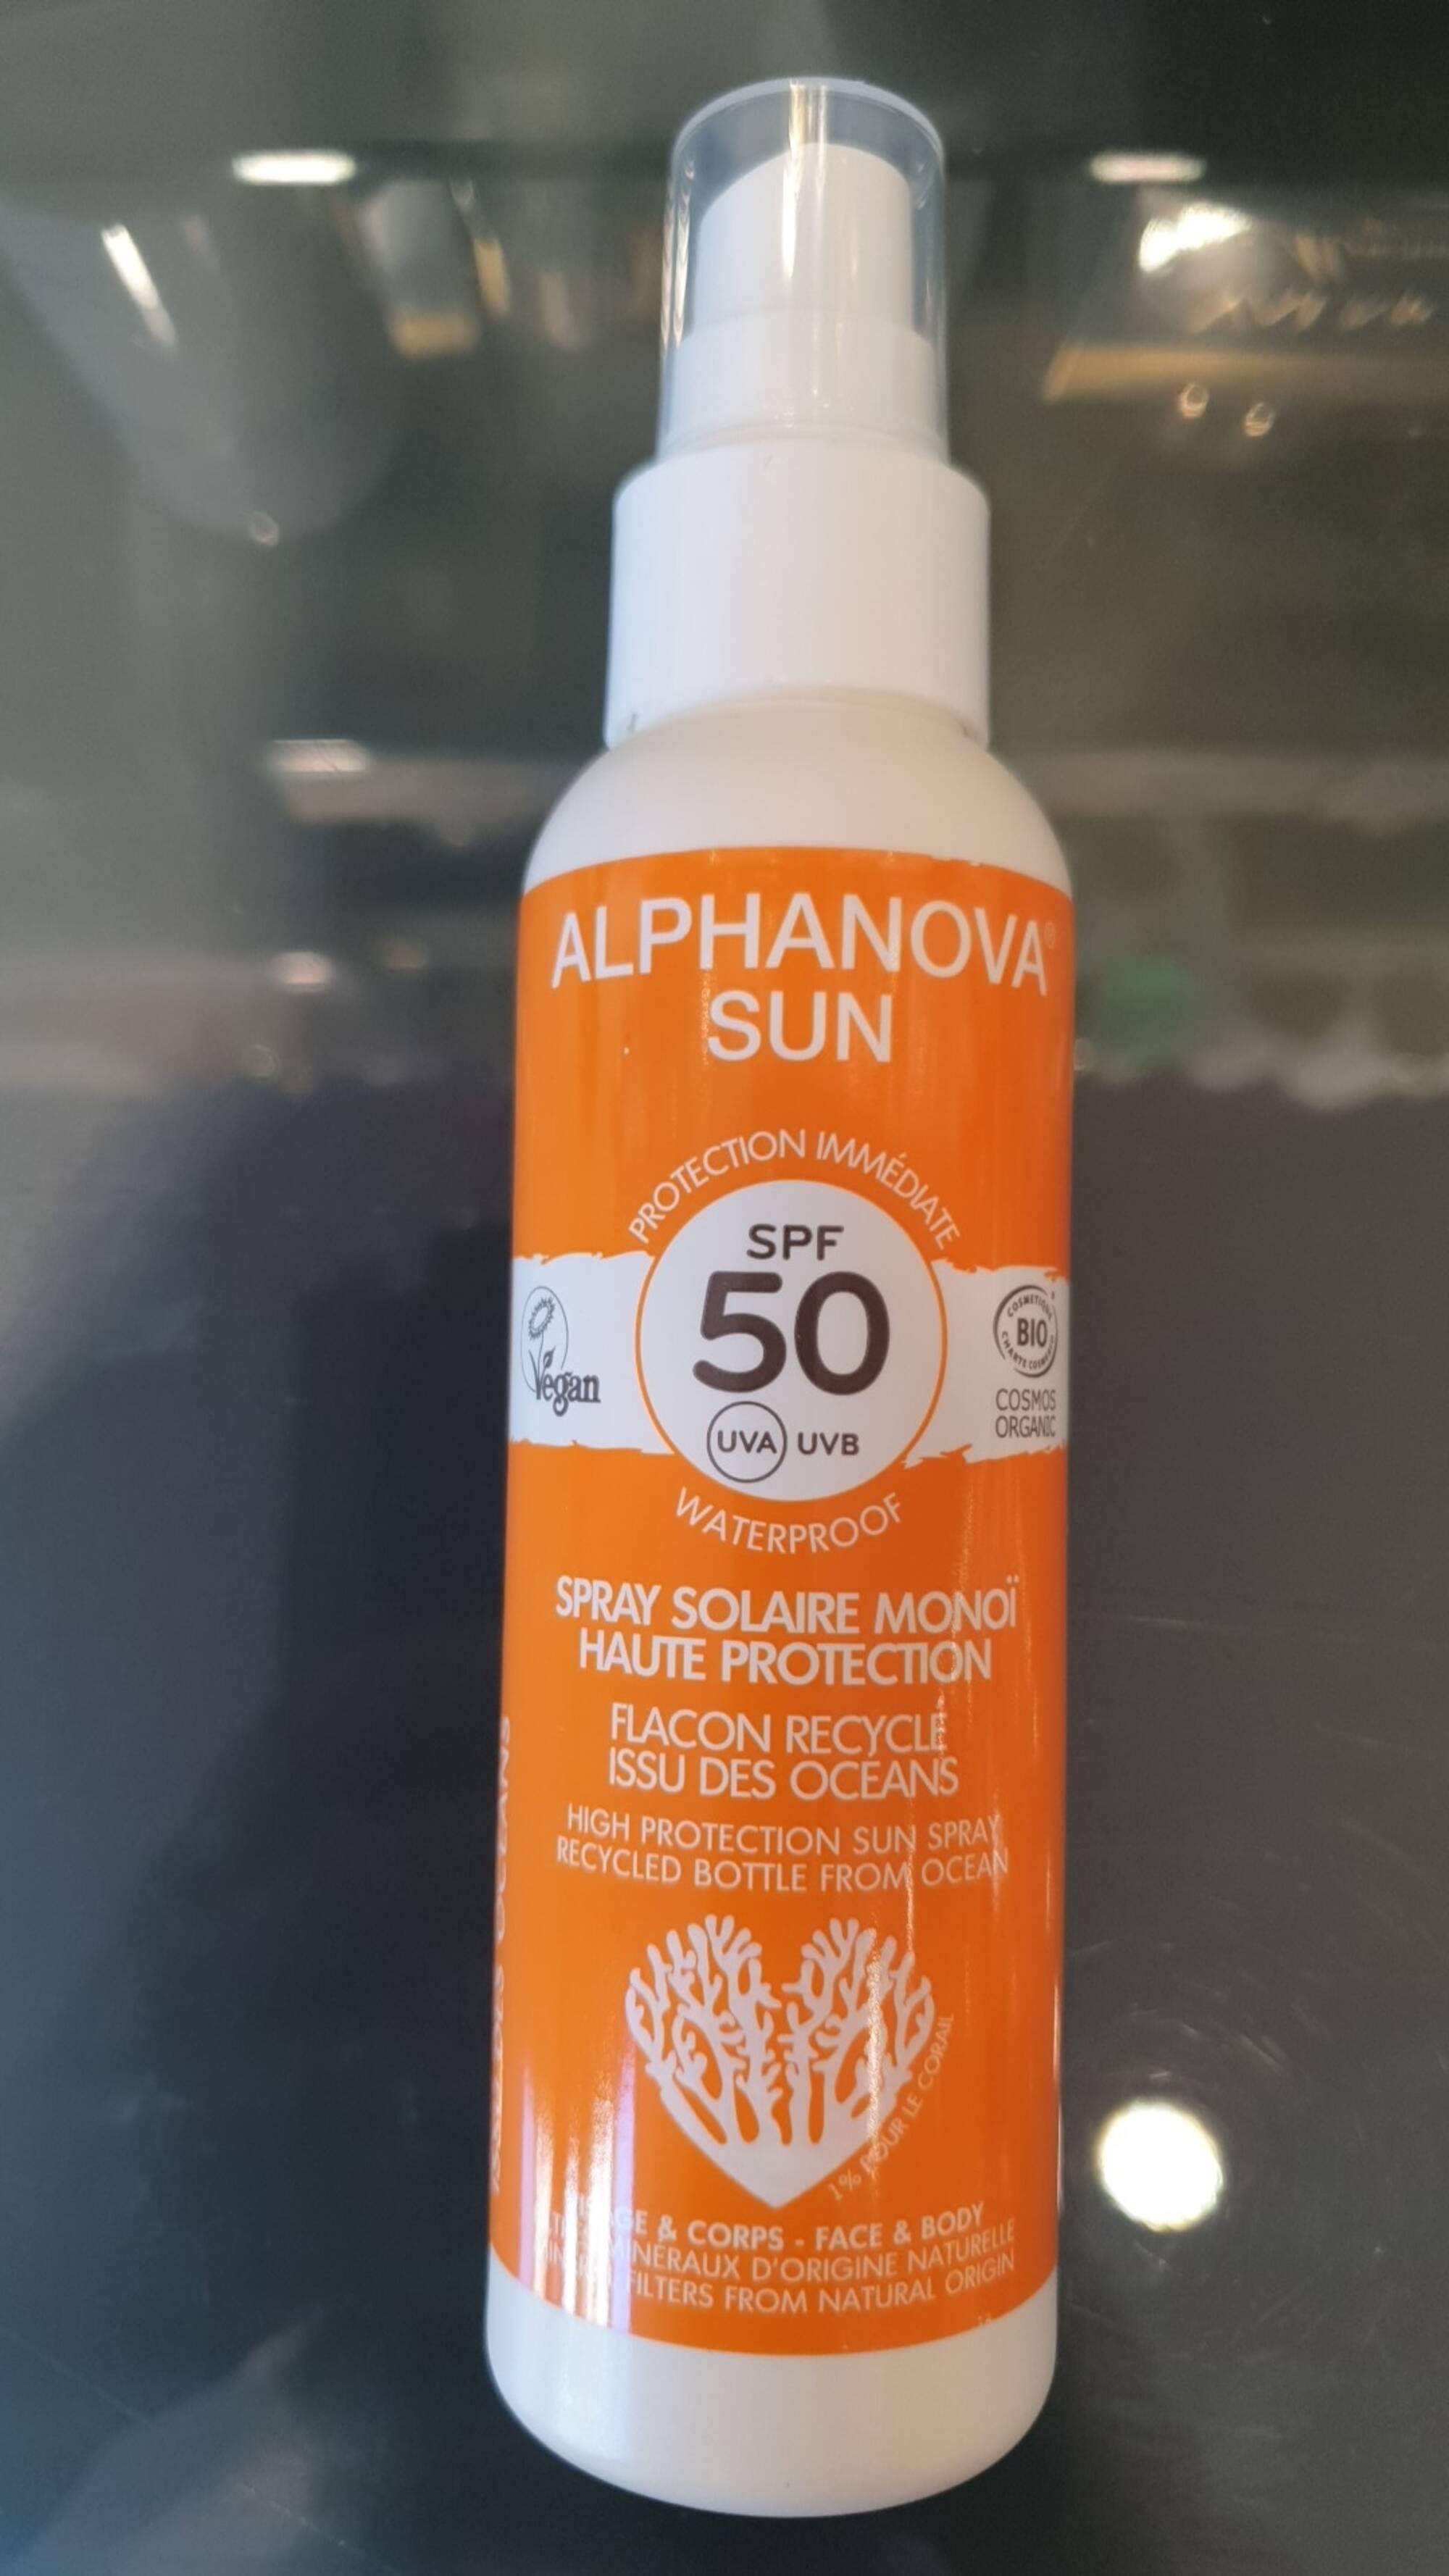 Alphanova crème solaire bébé bio en spray spf 50 125g